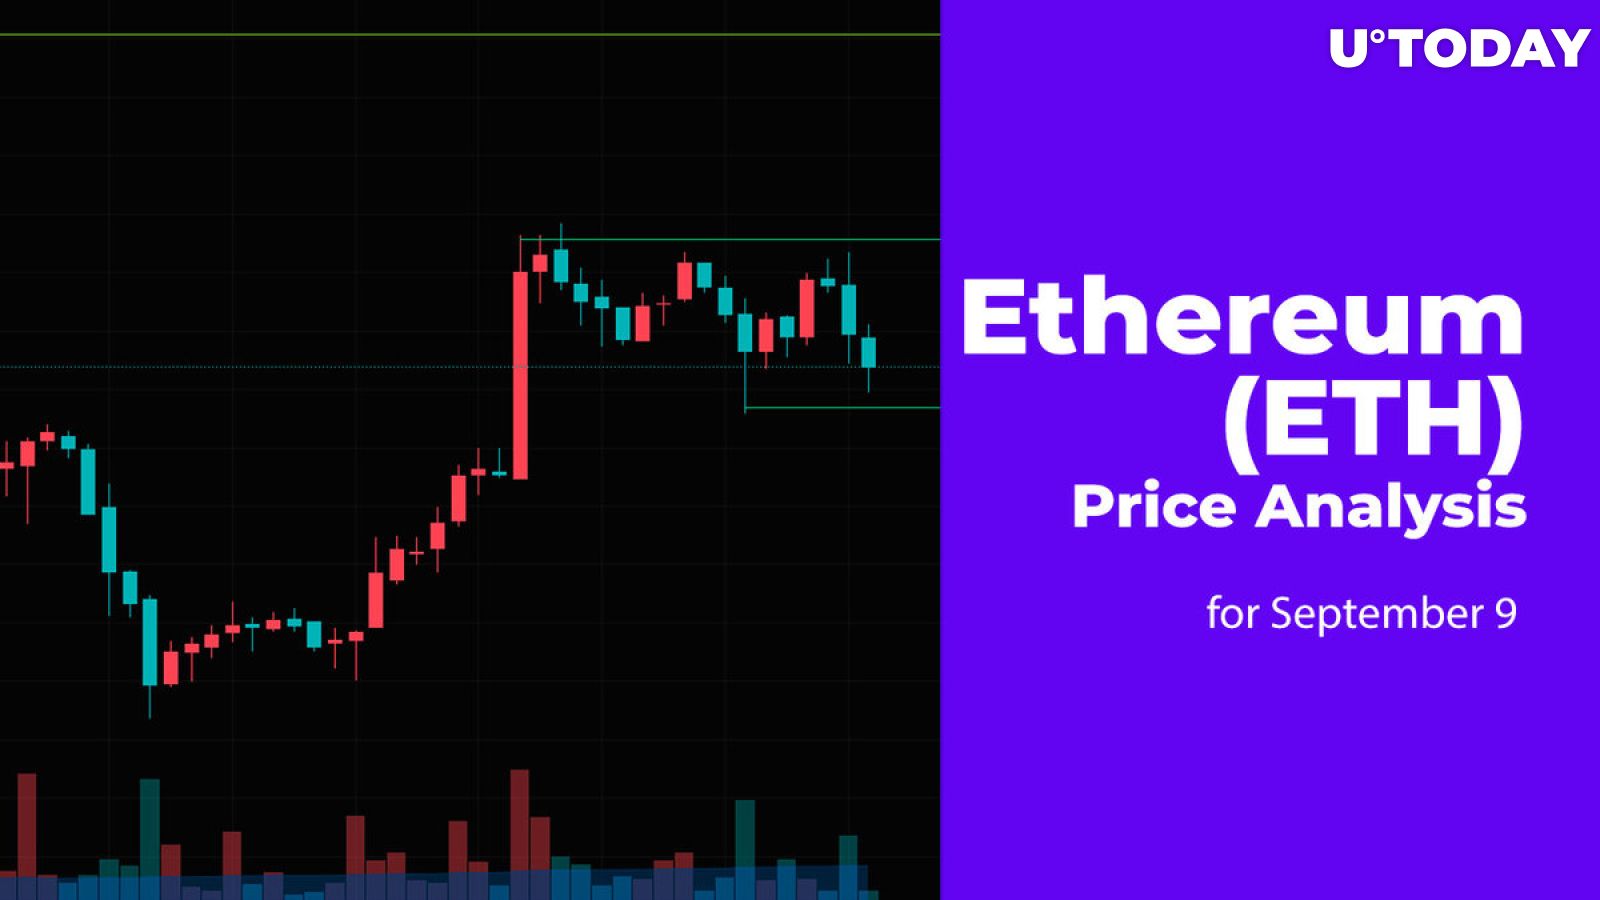 Ethereum (ETH) Price Analysis for September 9